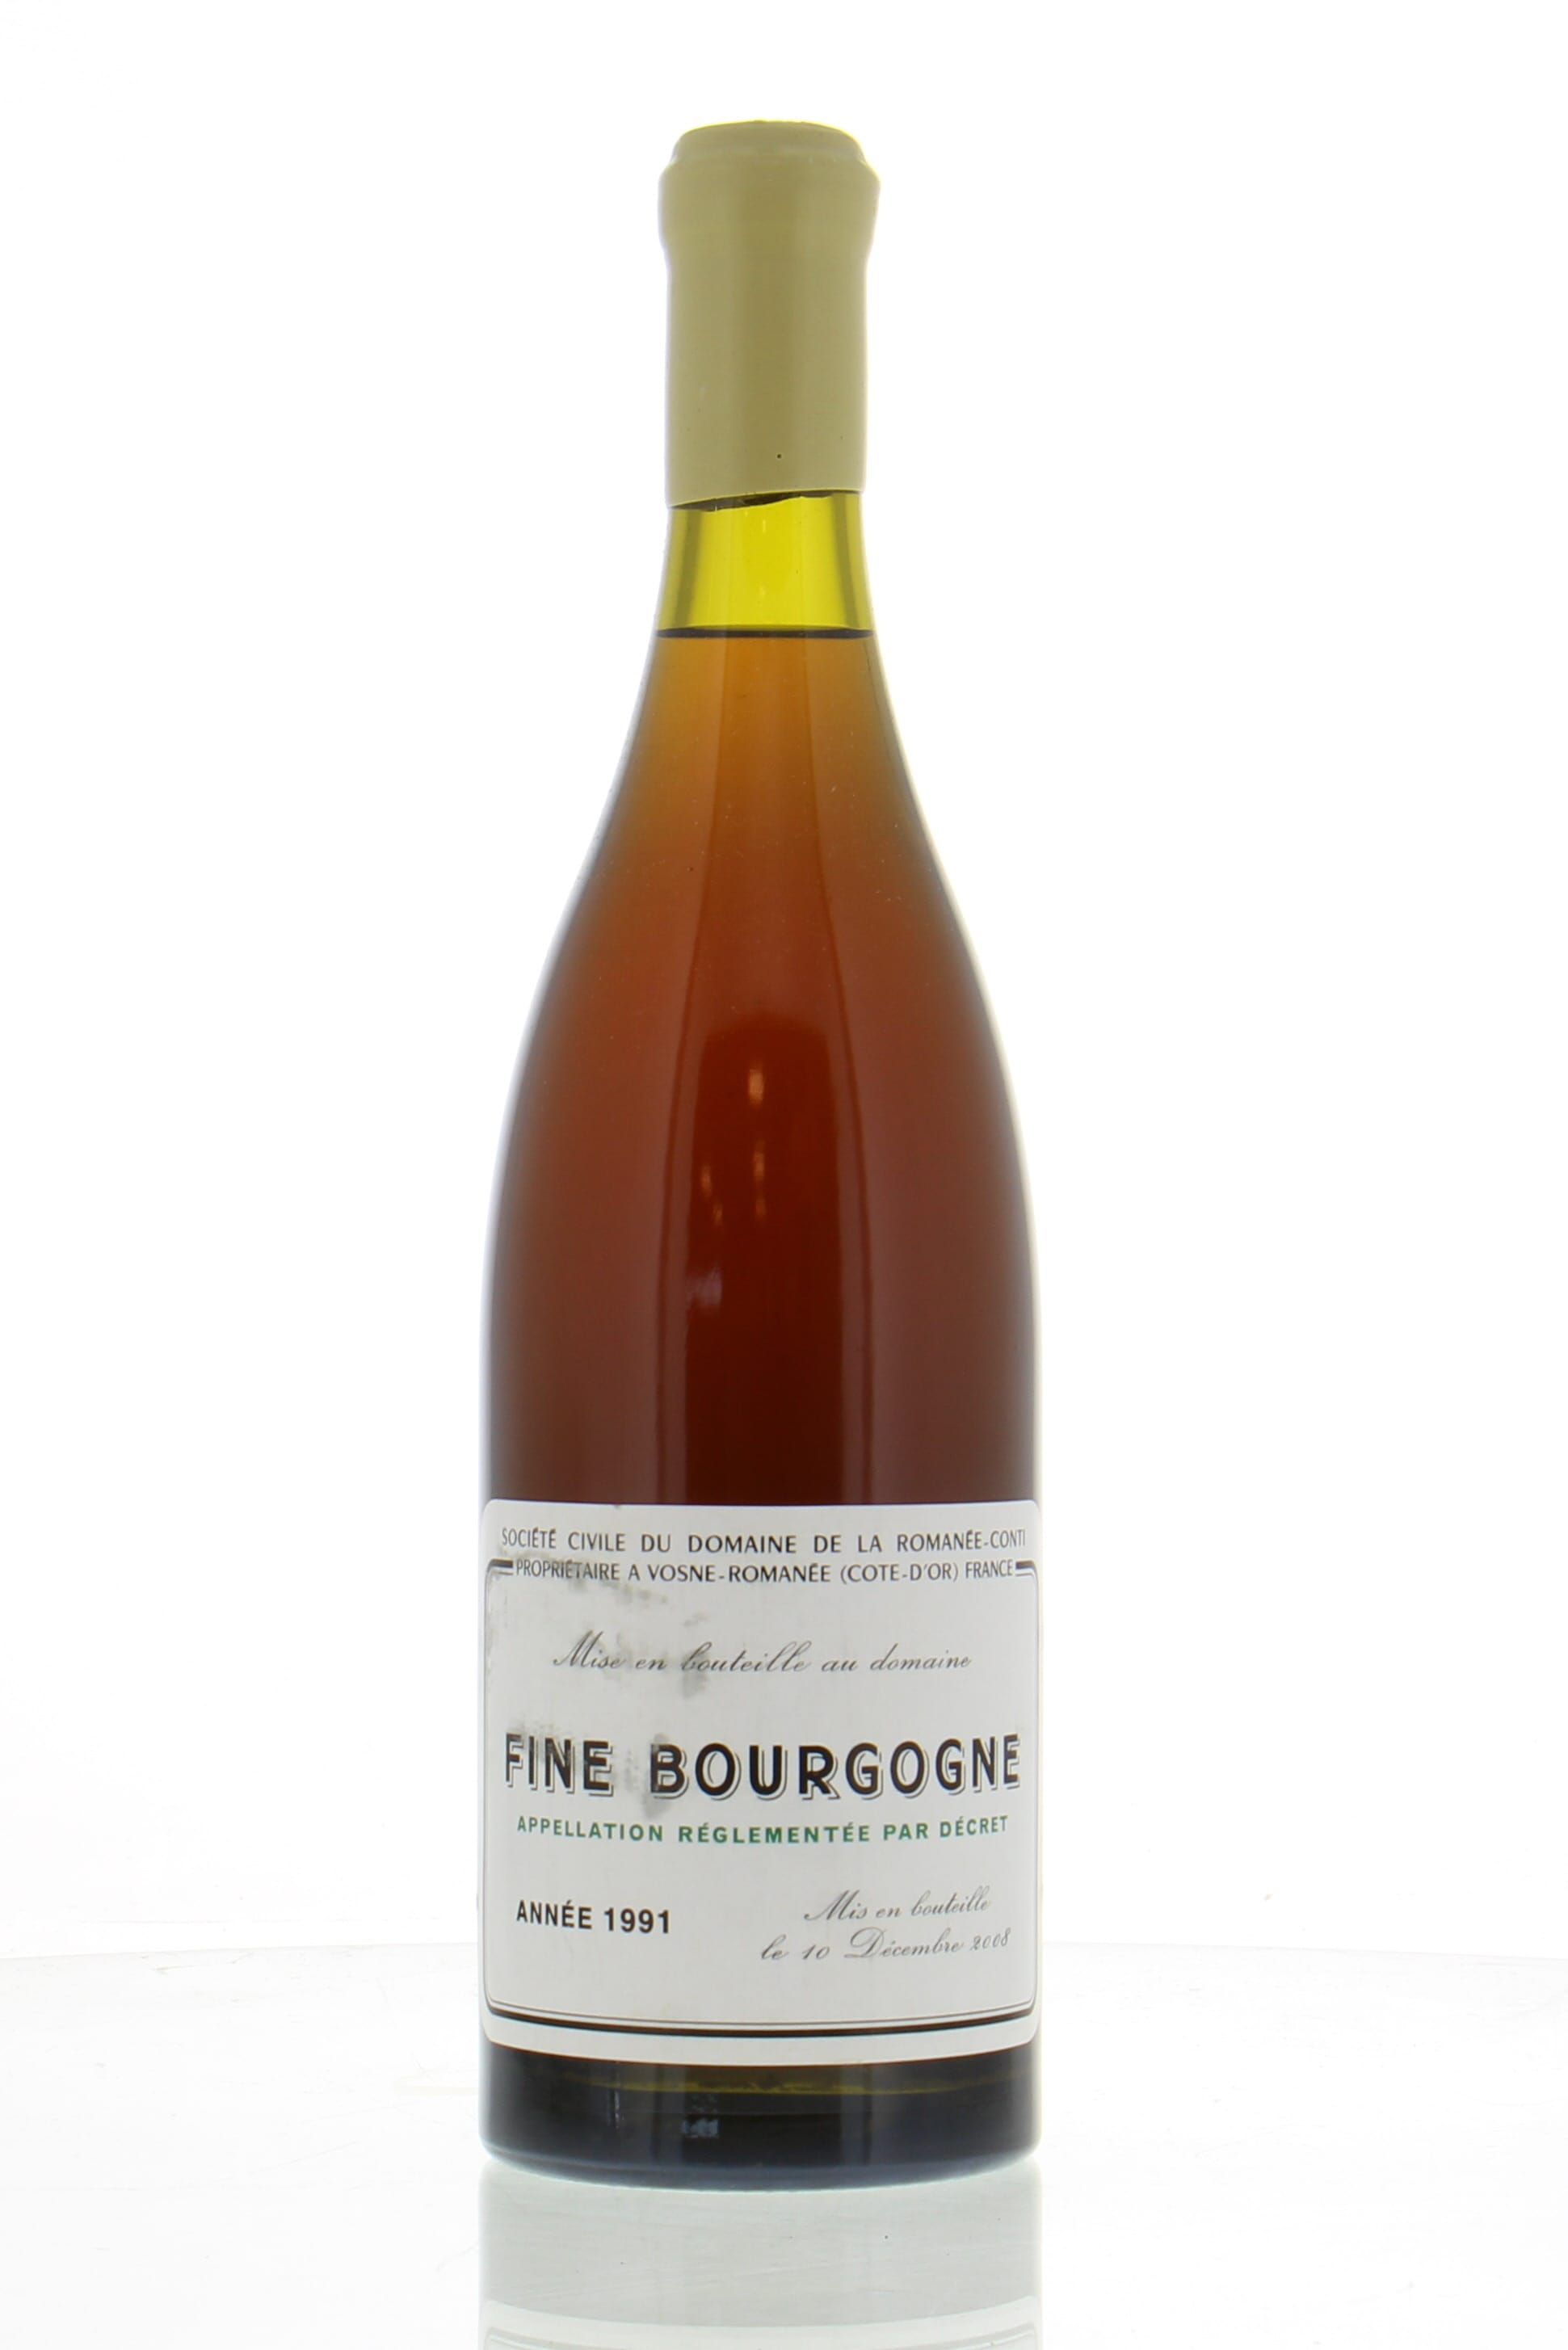 Domaine de la Romanee Conti - Fine de Bourgogne 1991